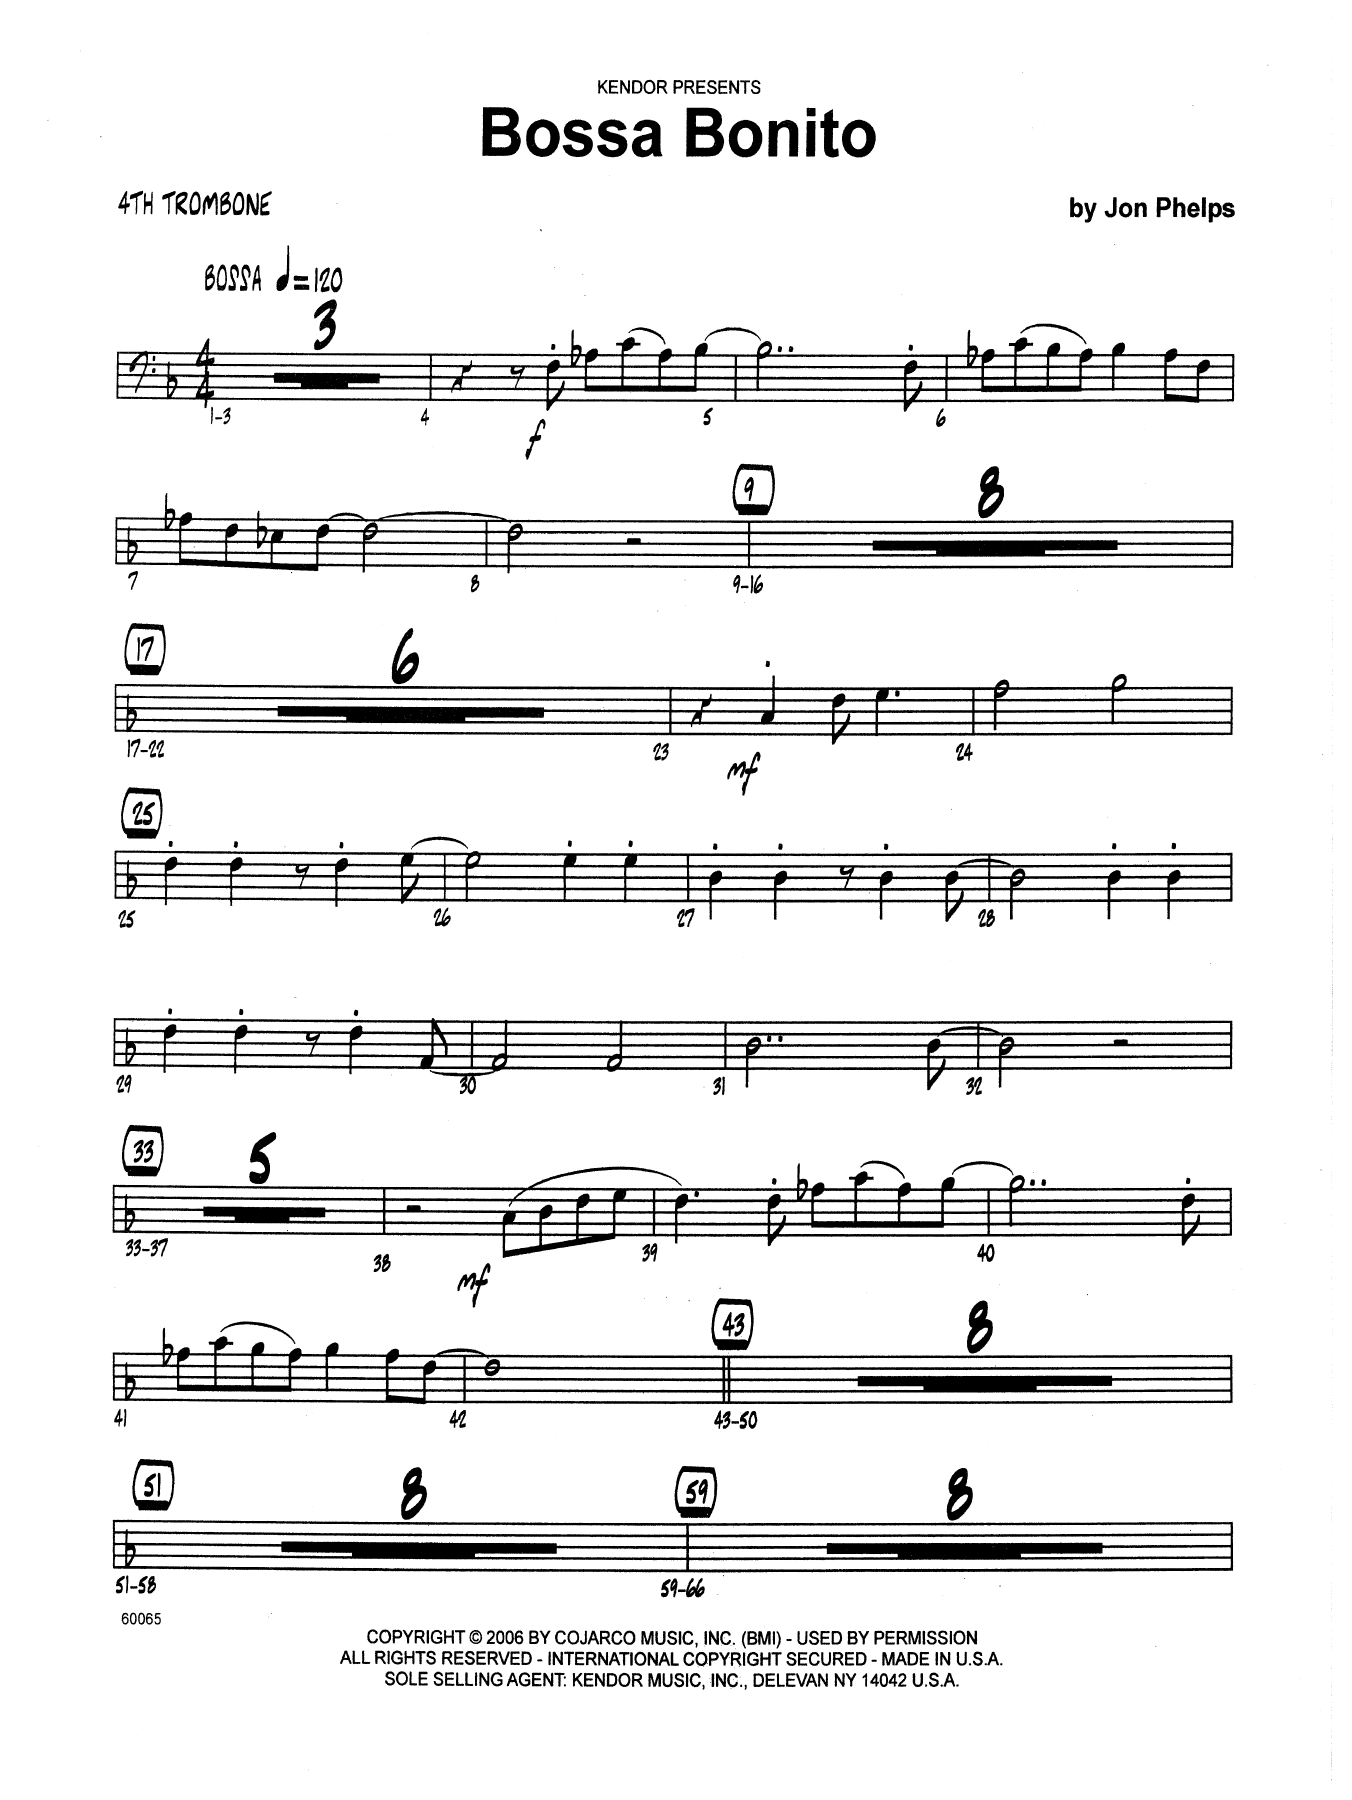 Download Jon Phelps Bossa Bonito - 4th Trombone Sheet Music